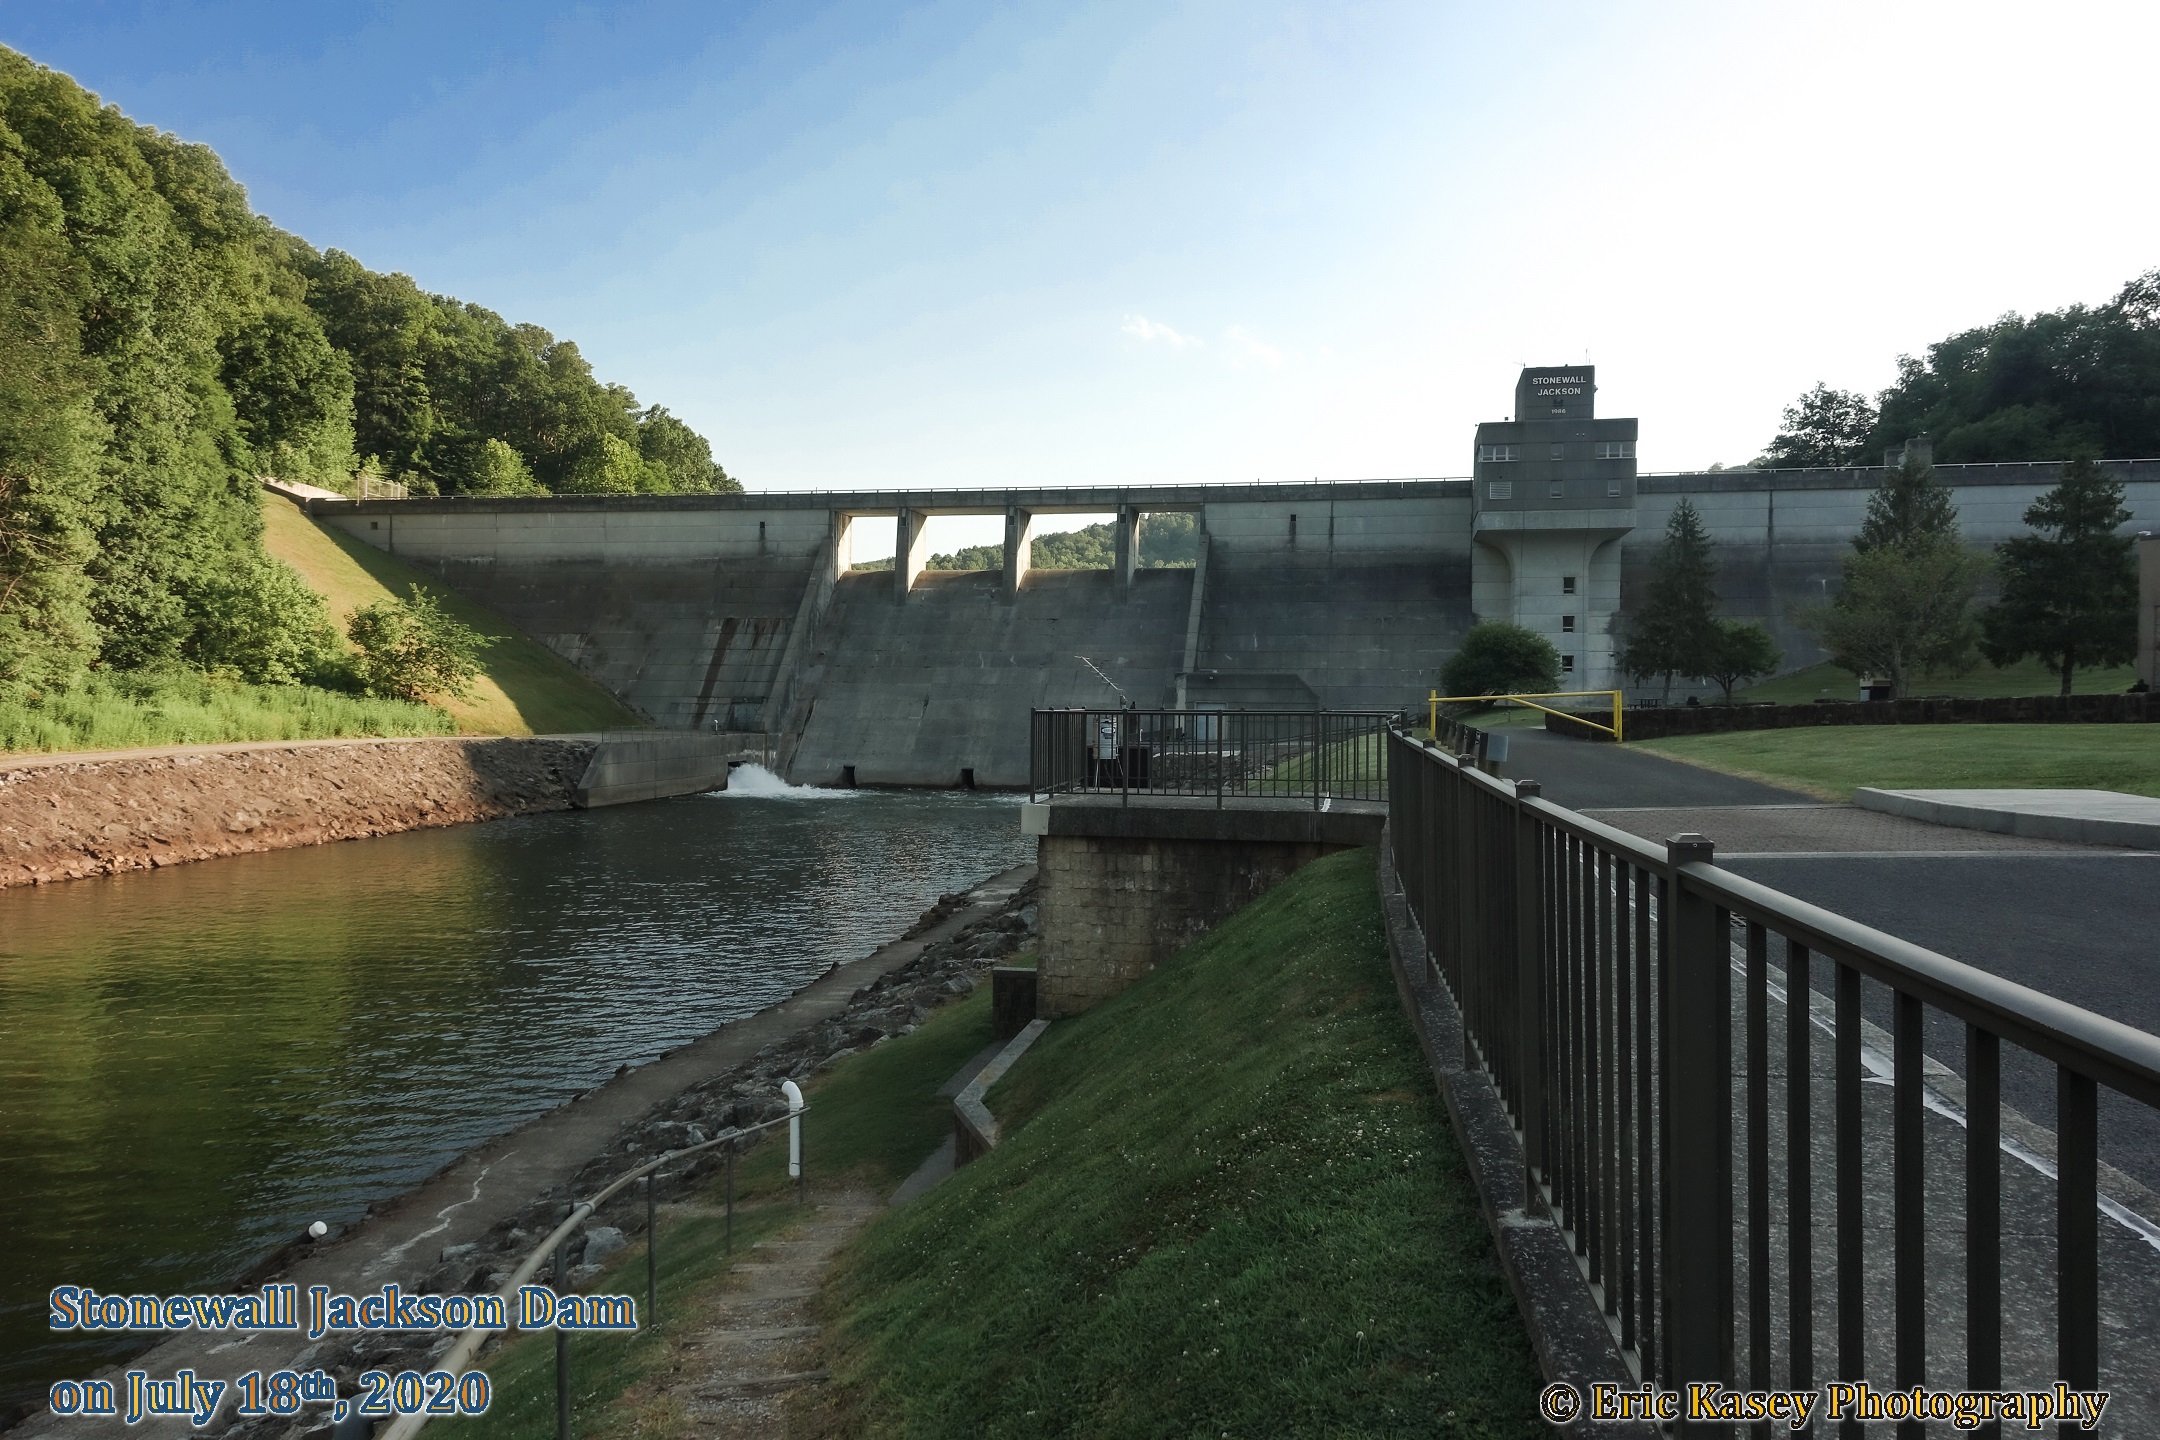 38 - Stonewall Jackson Dam on July 18th, 2020.JPG